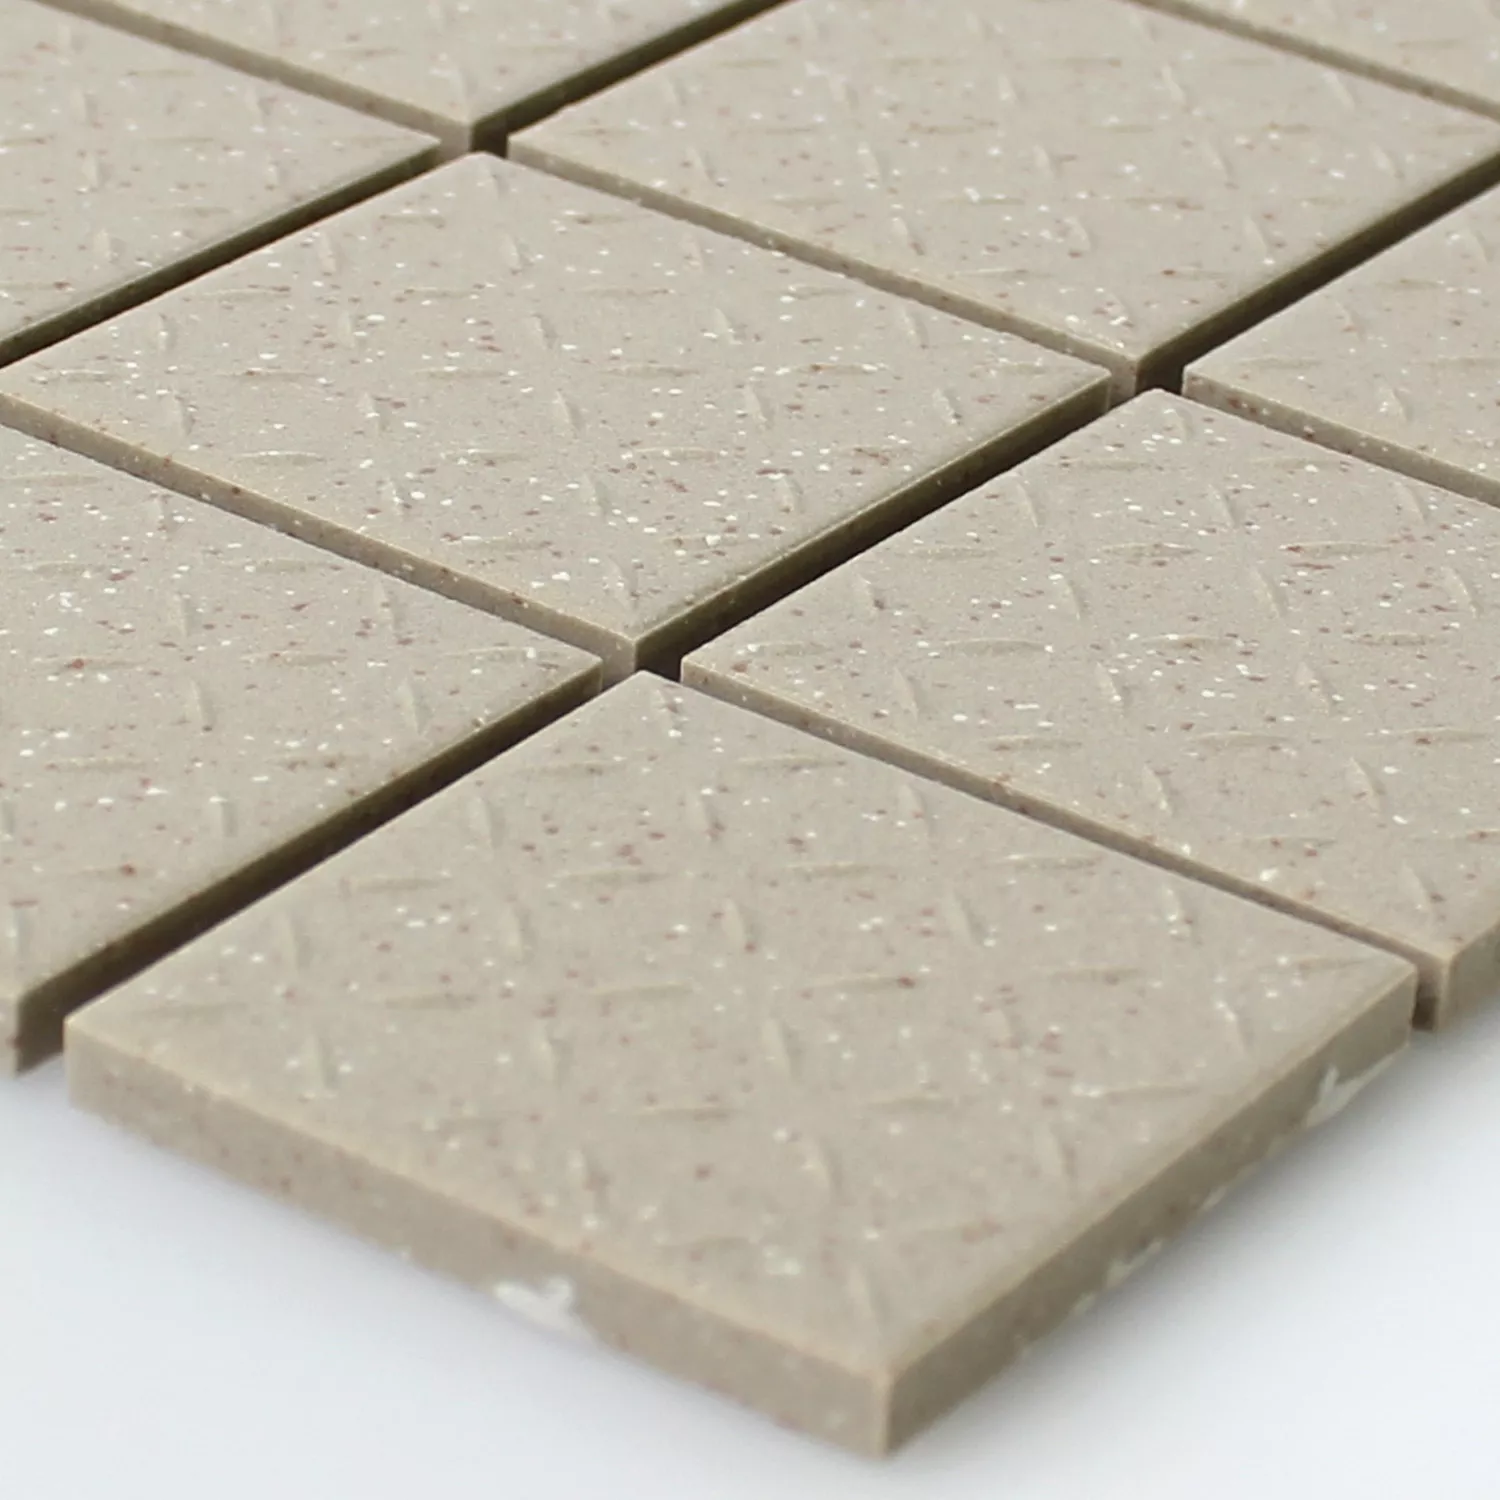 Sample Mosaic Tiles Ceramic Beige Mat R11